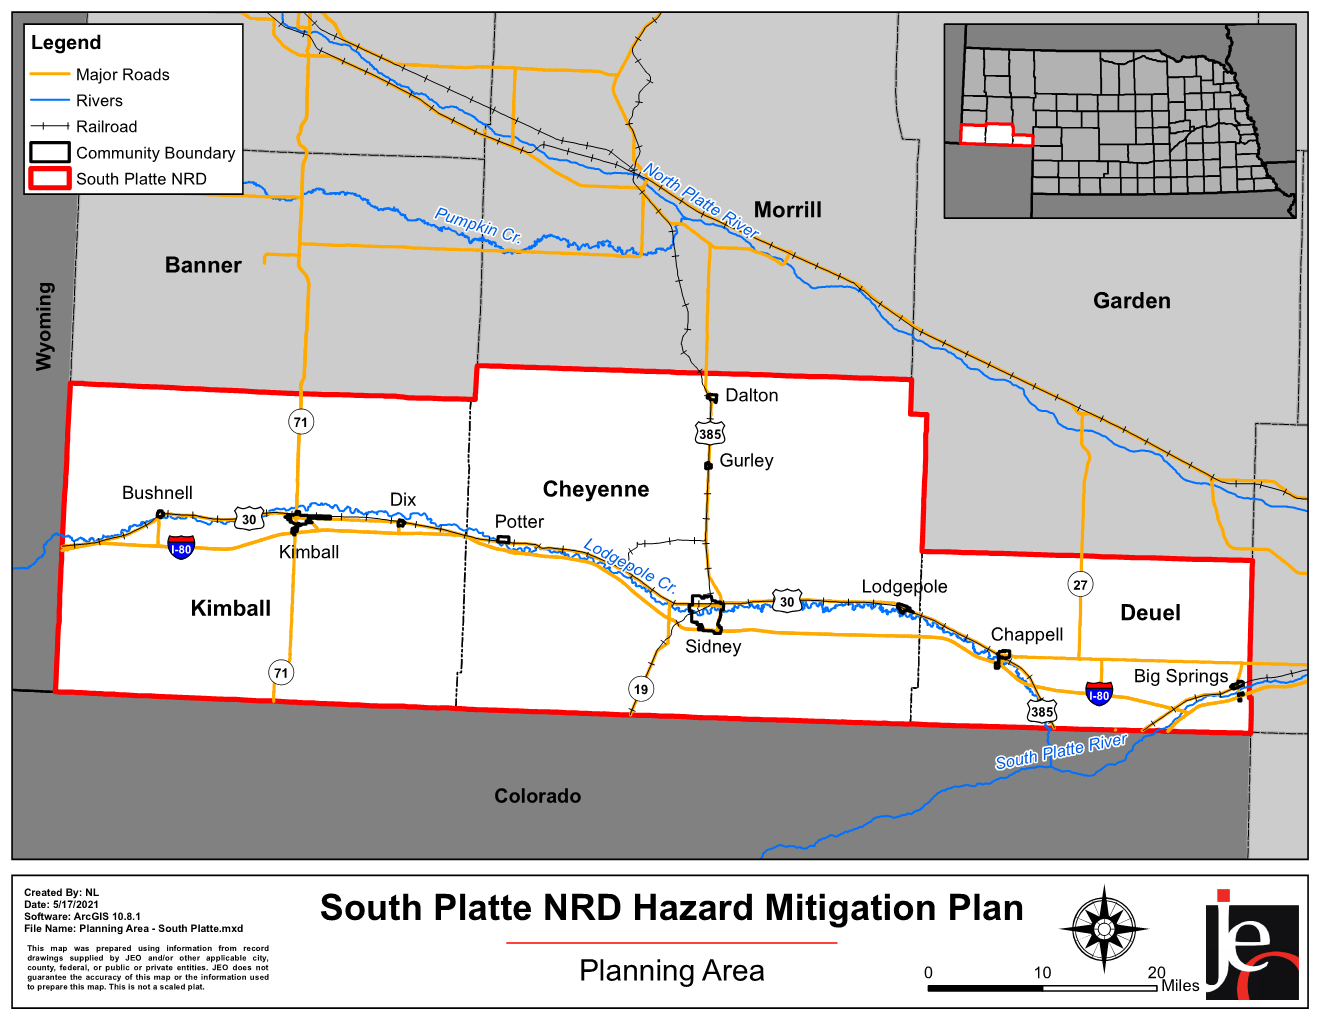 South Platte NRD planning area map